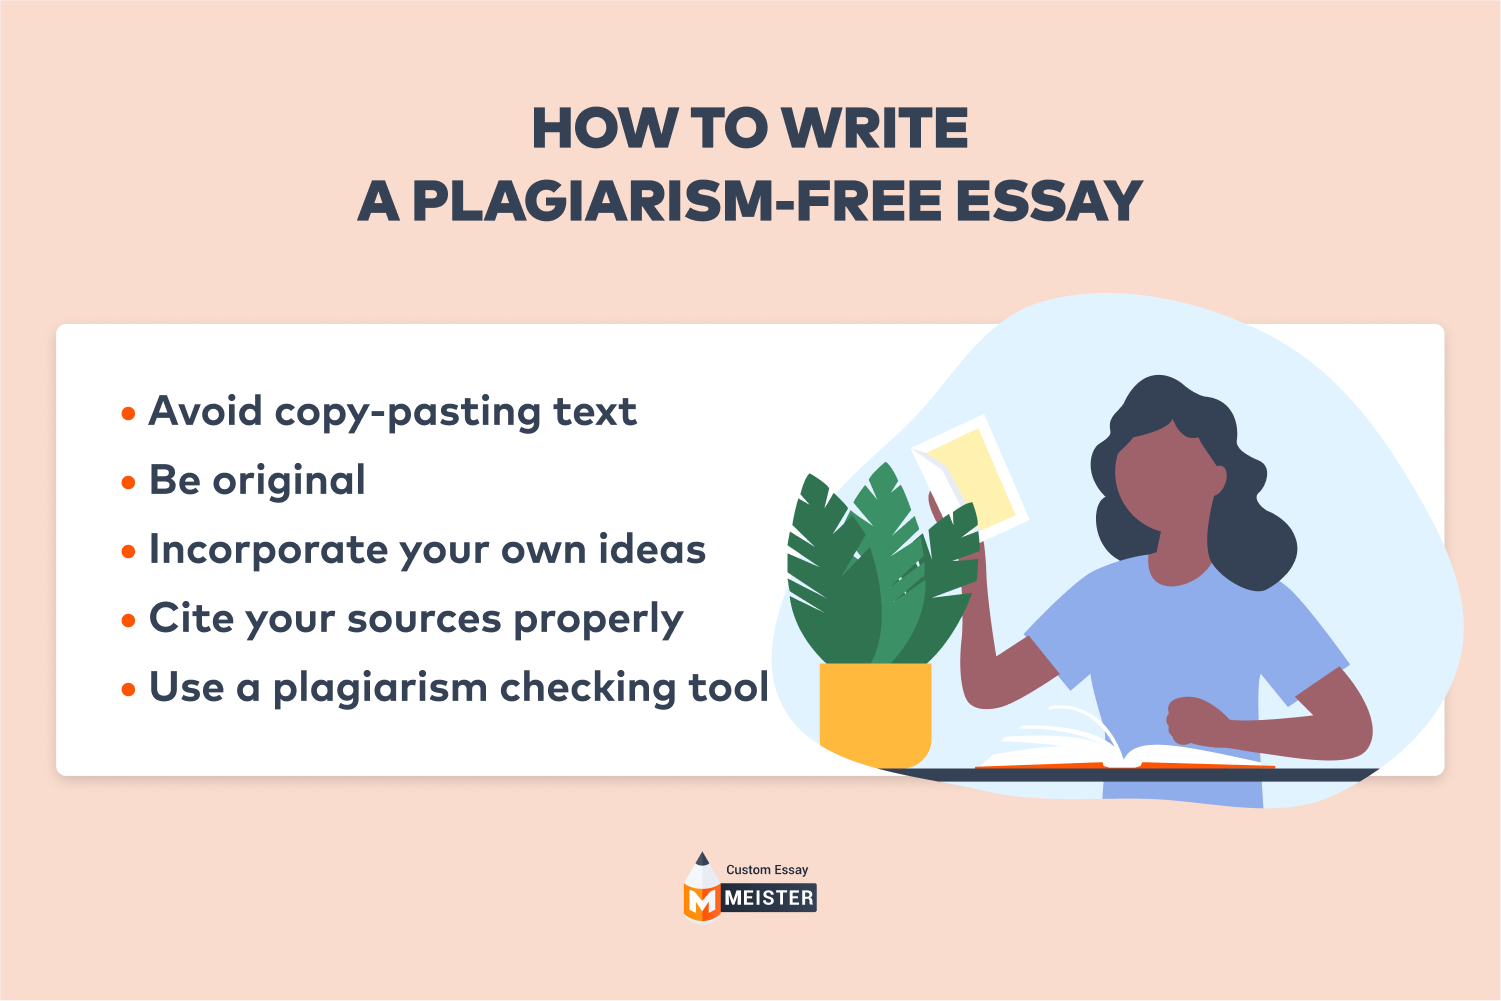 essays online to plagiarize